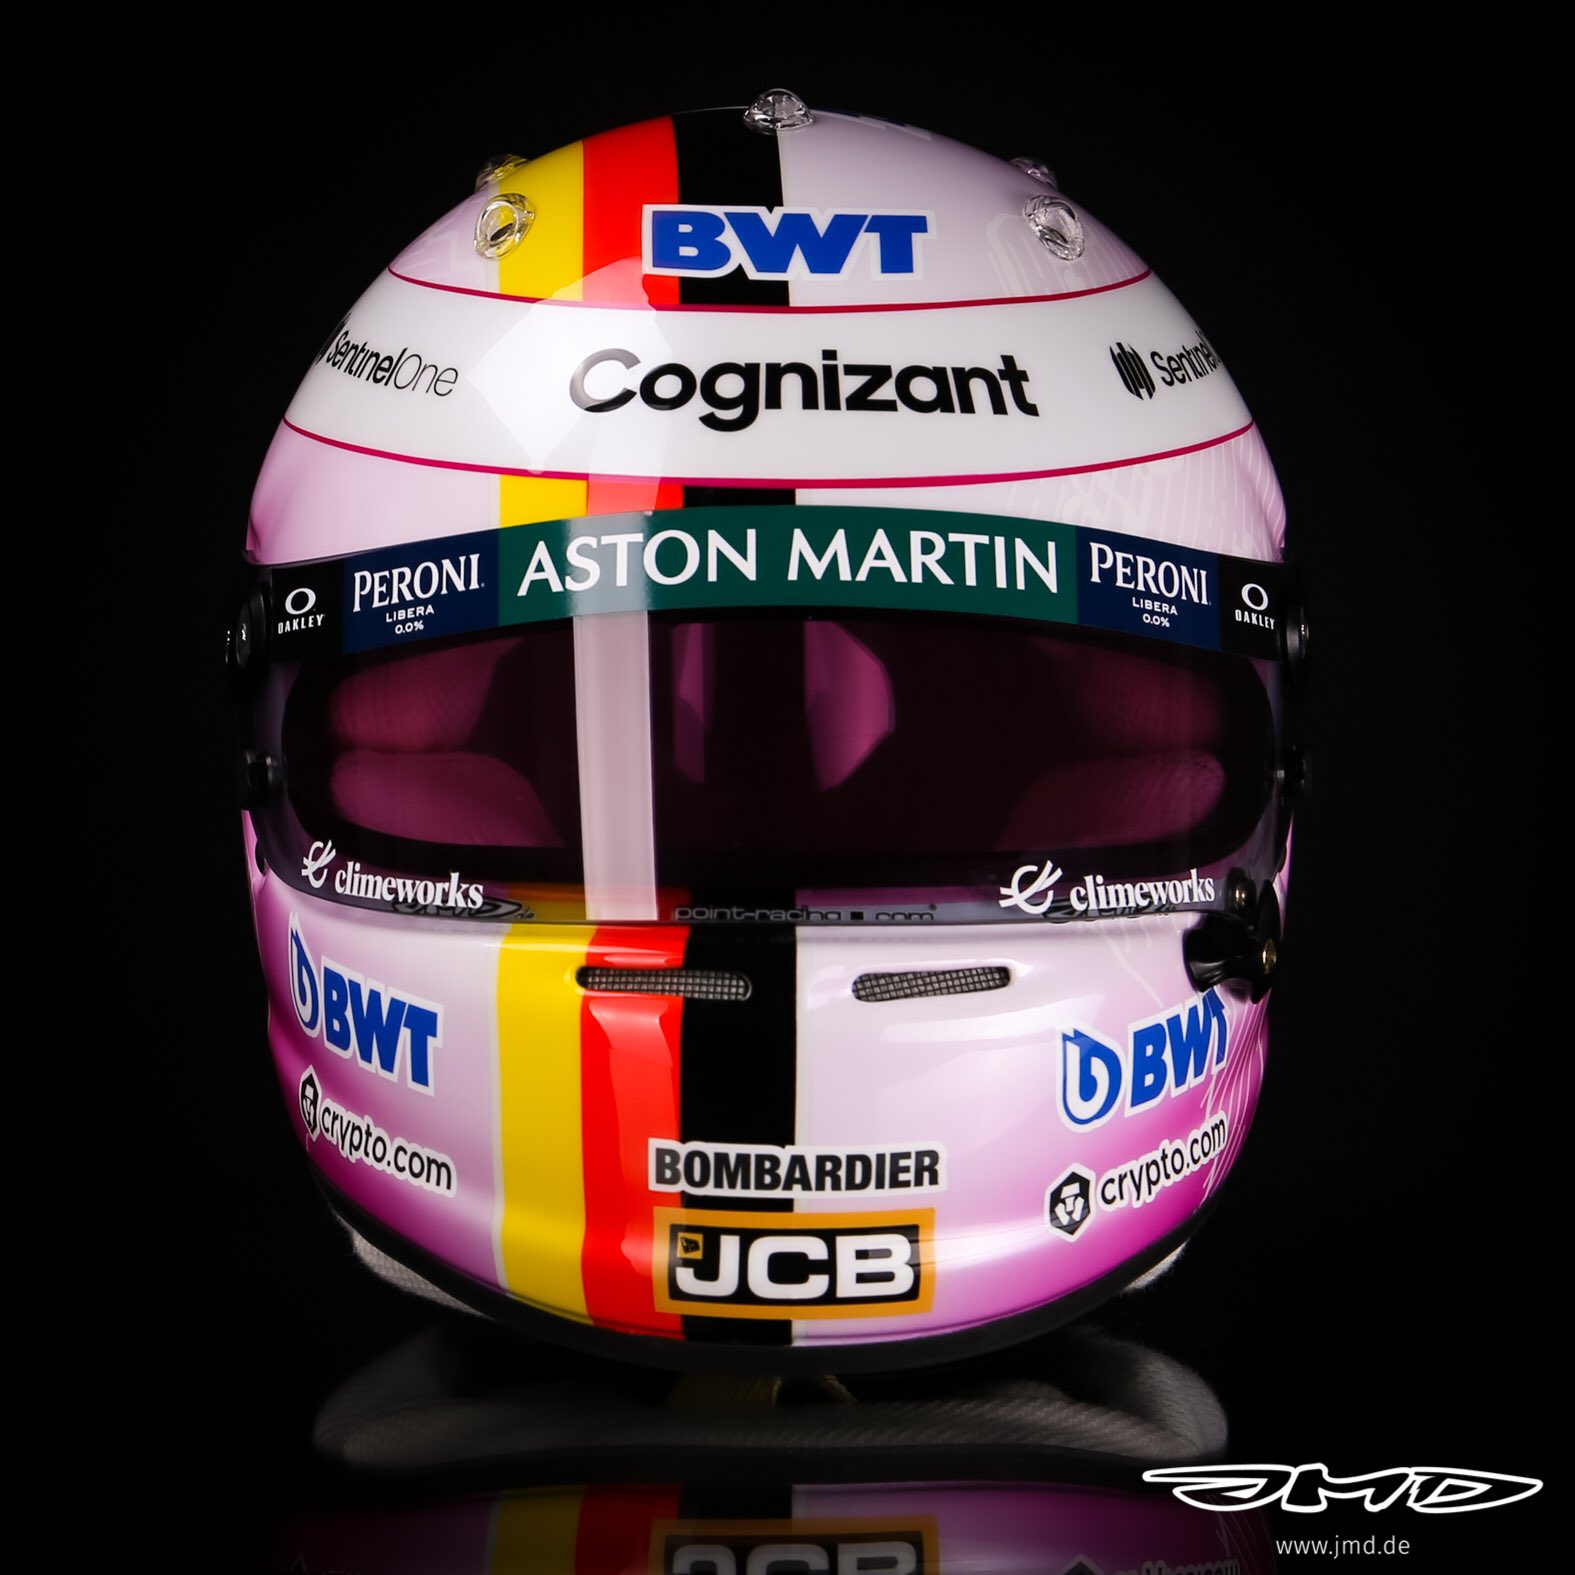 Sebastian Vettel’s Portuguese Grand Prix helmet, Algarve, 2021